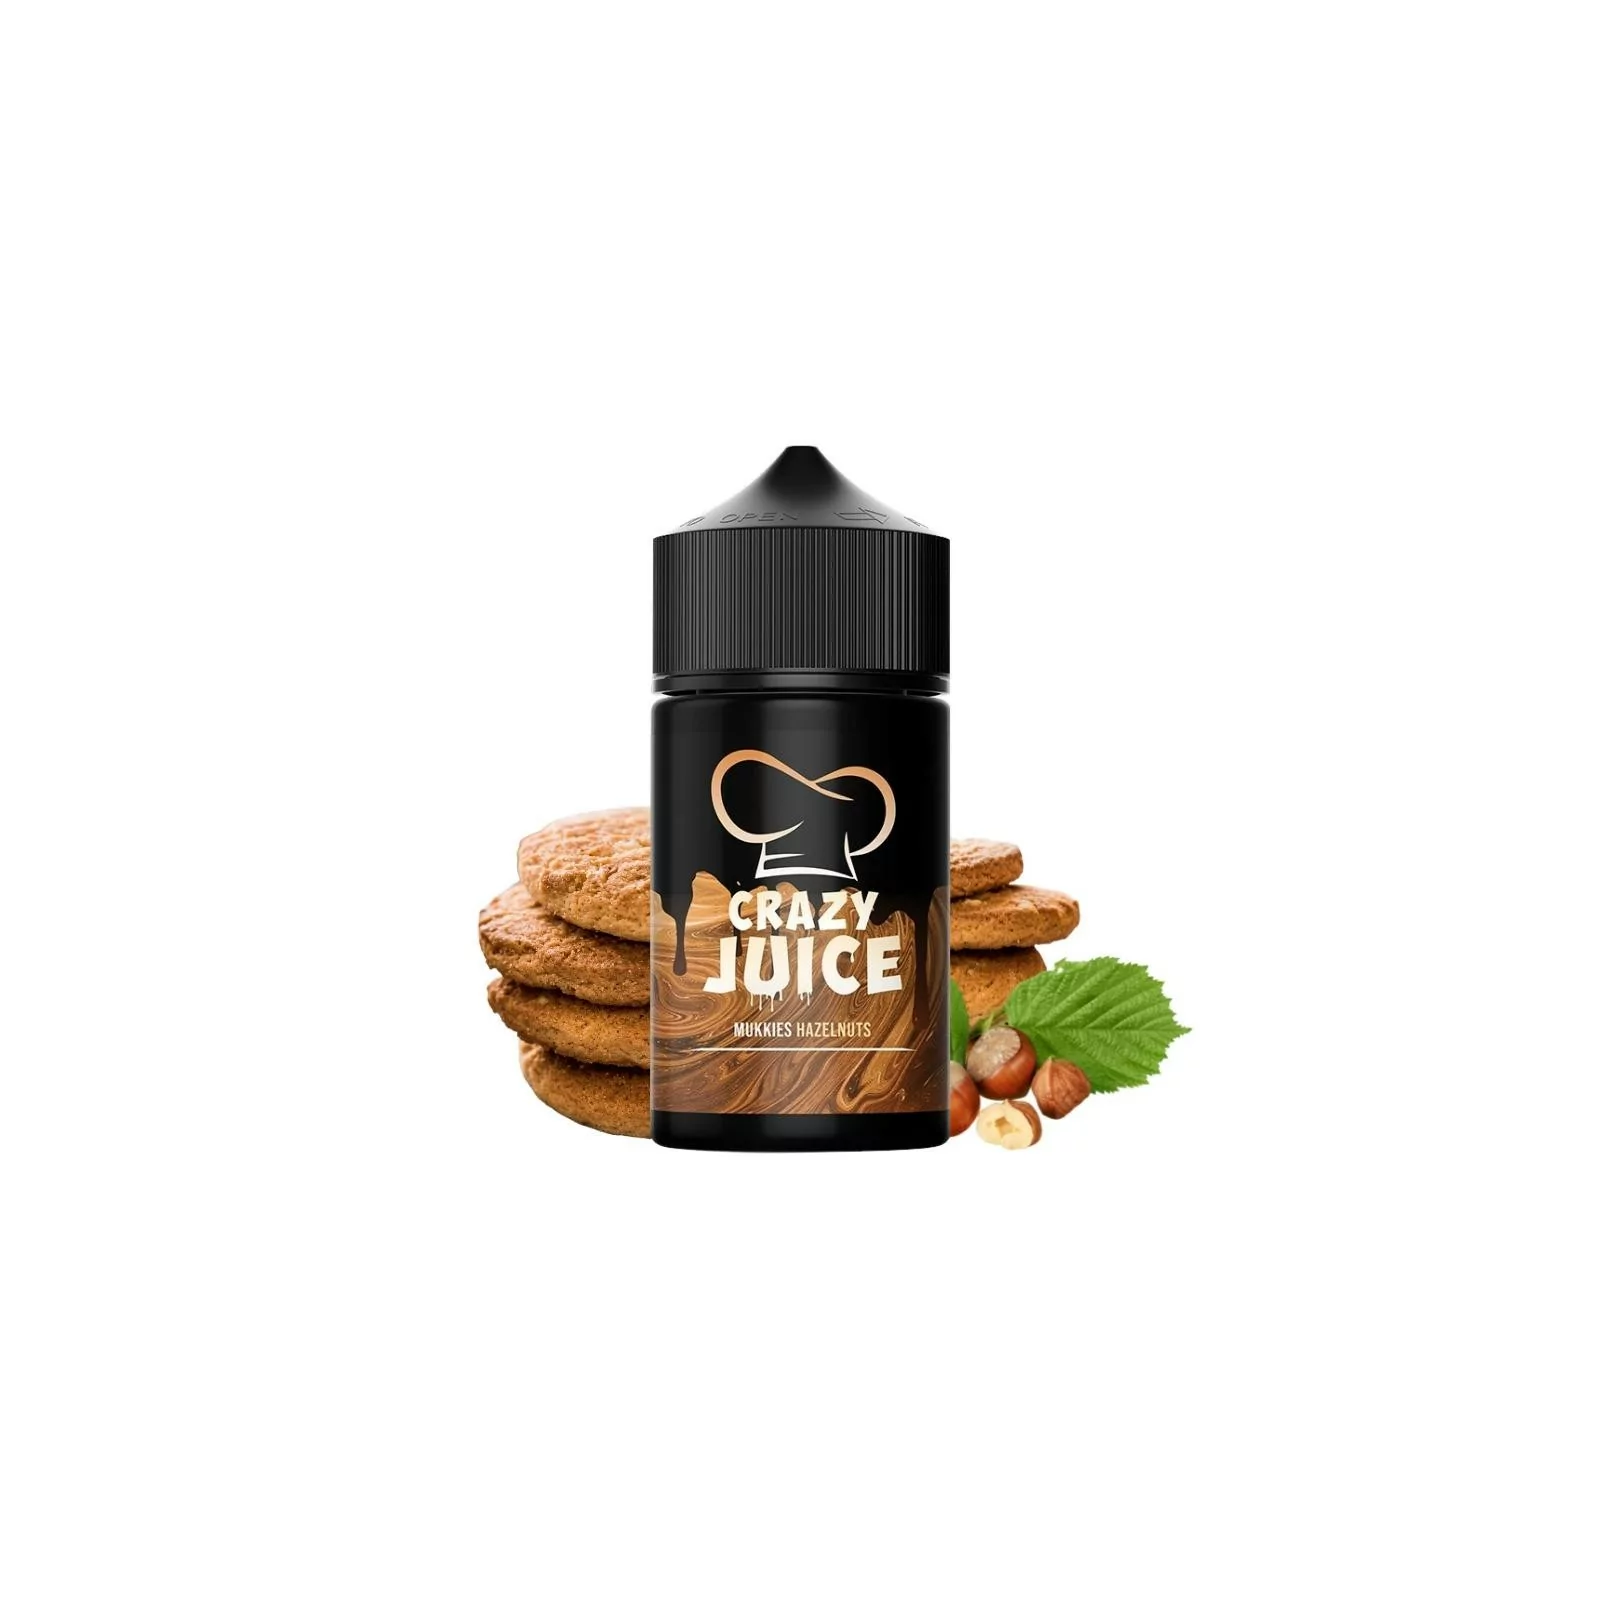 Mukkies Hazelnuts 50ml - Crazy Juice